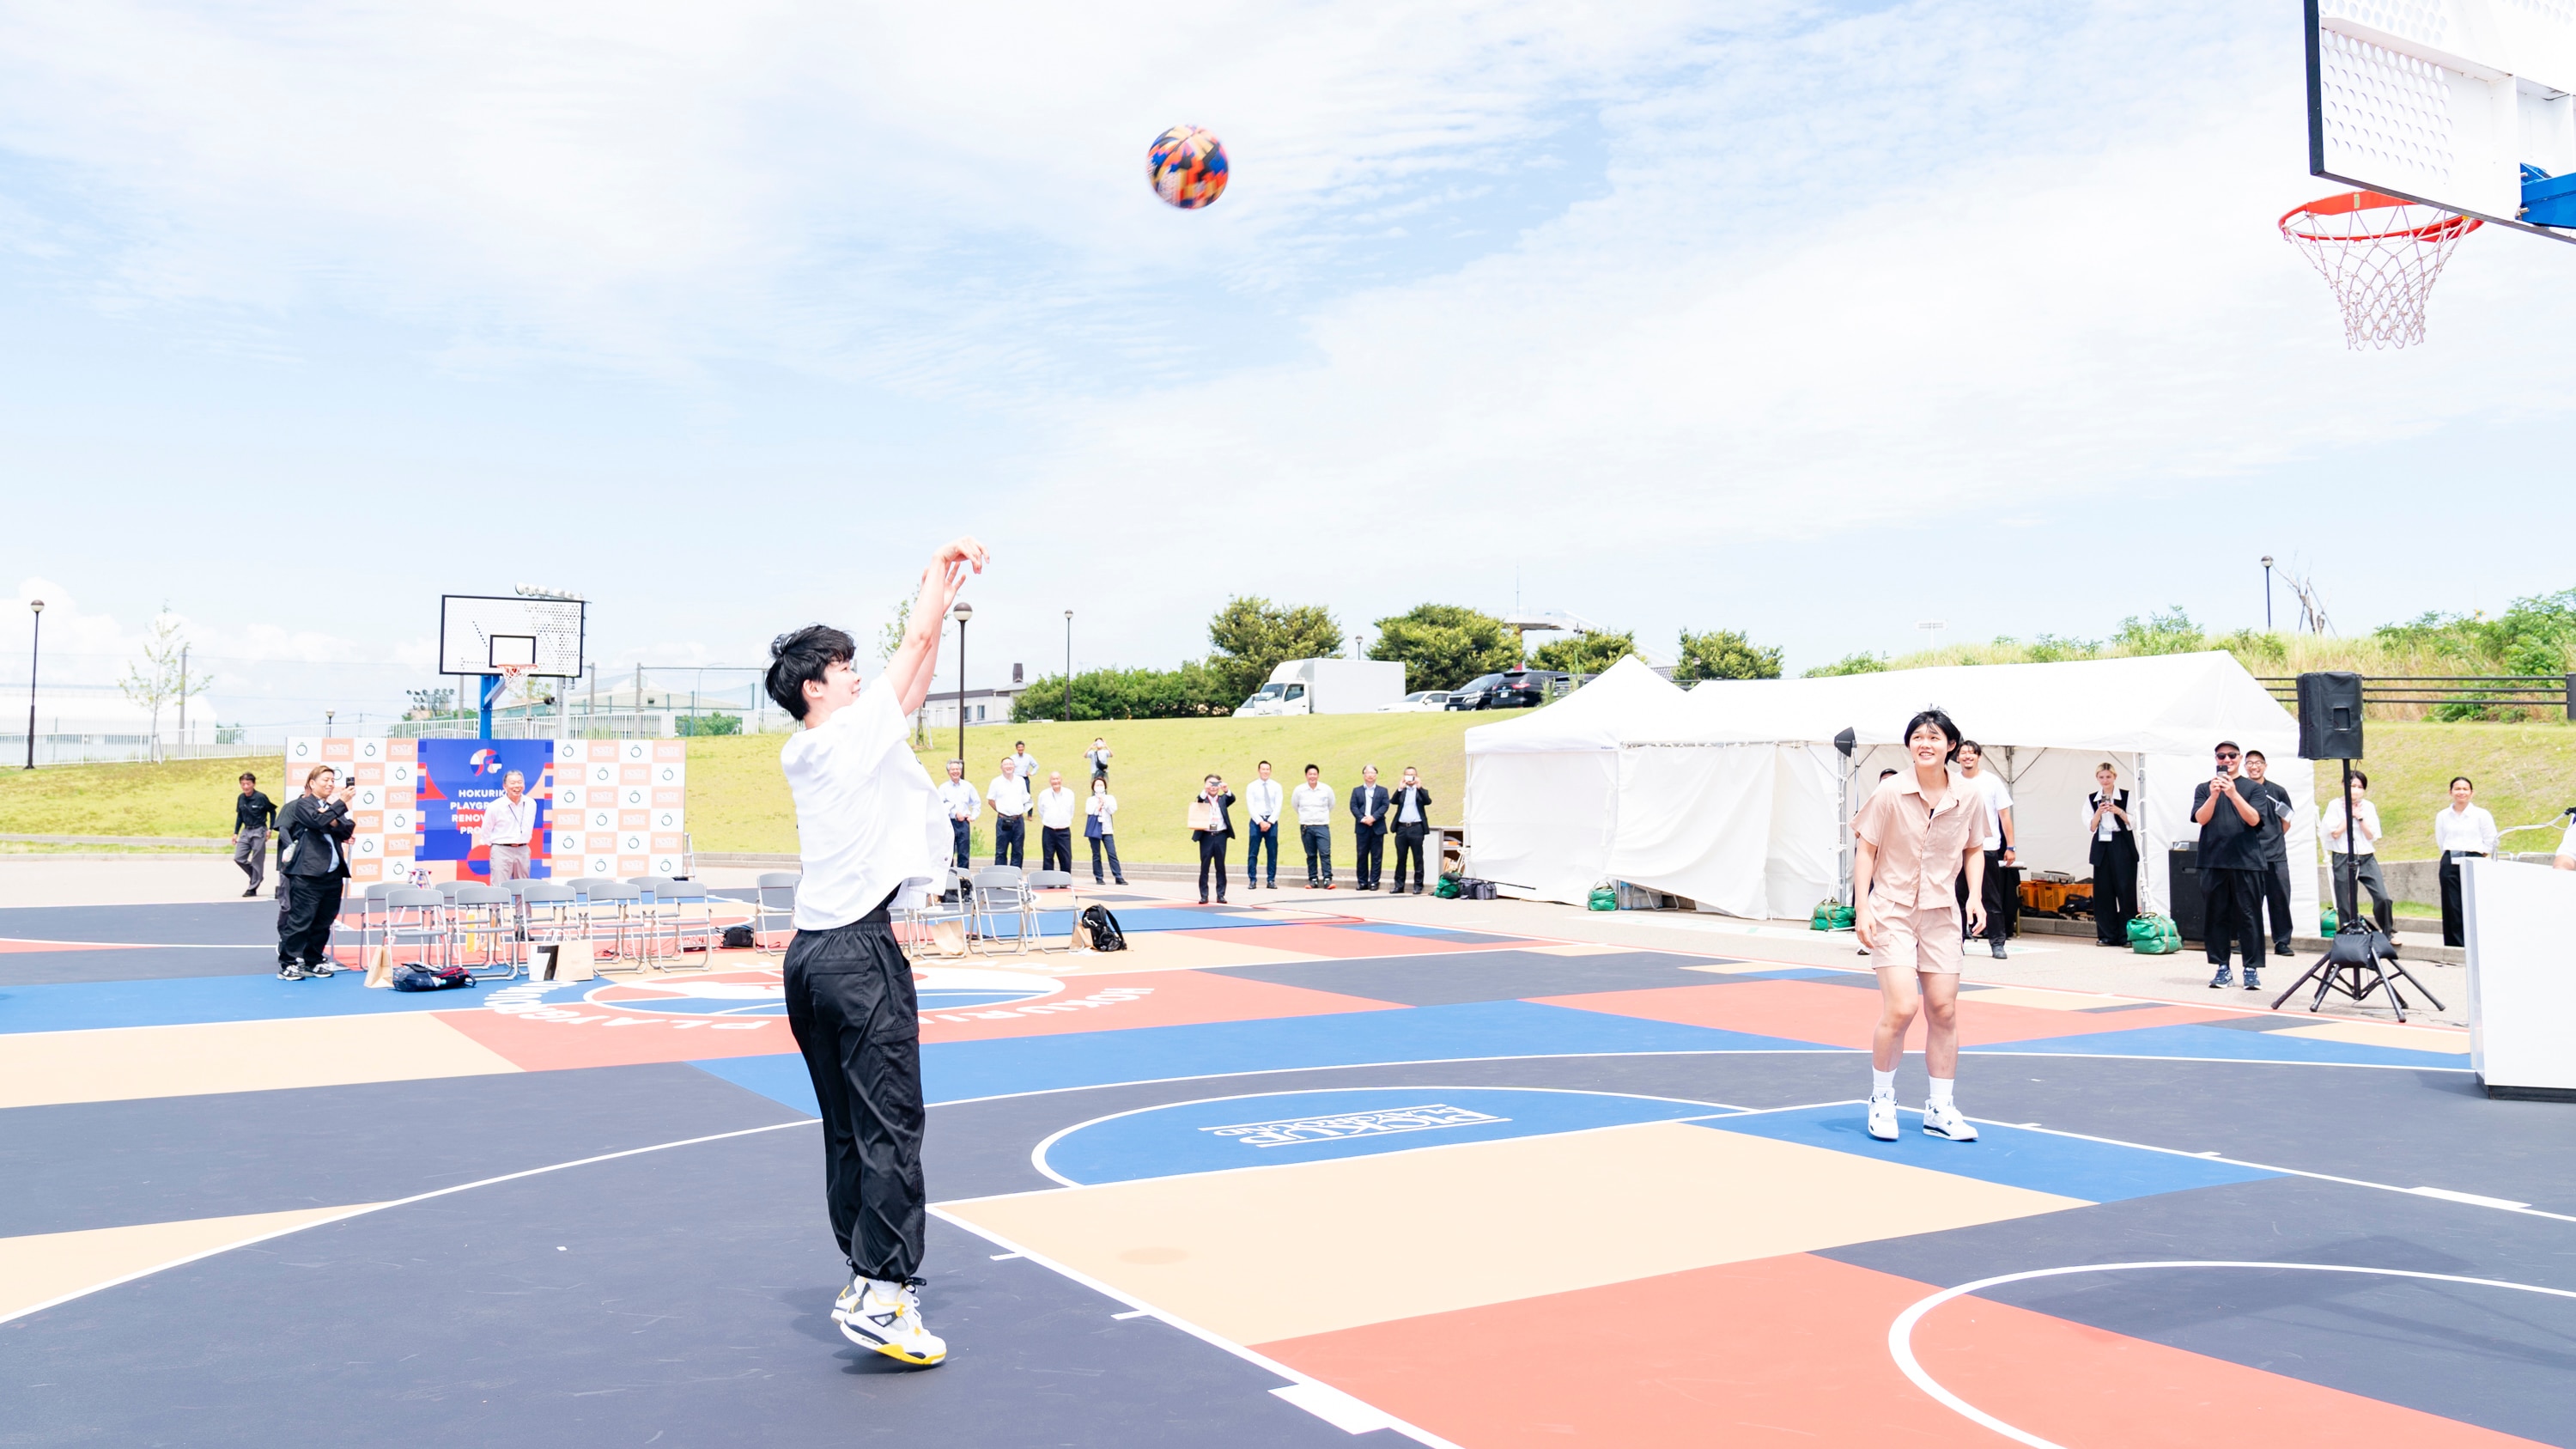 「HOKURIKU PLAYGROUND Renovation Project」によるバスケットボールコートが完成